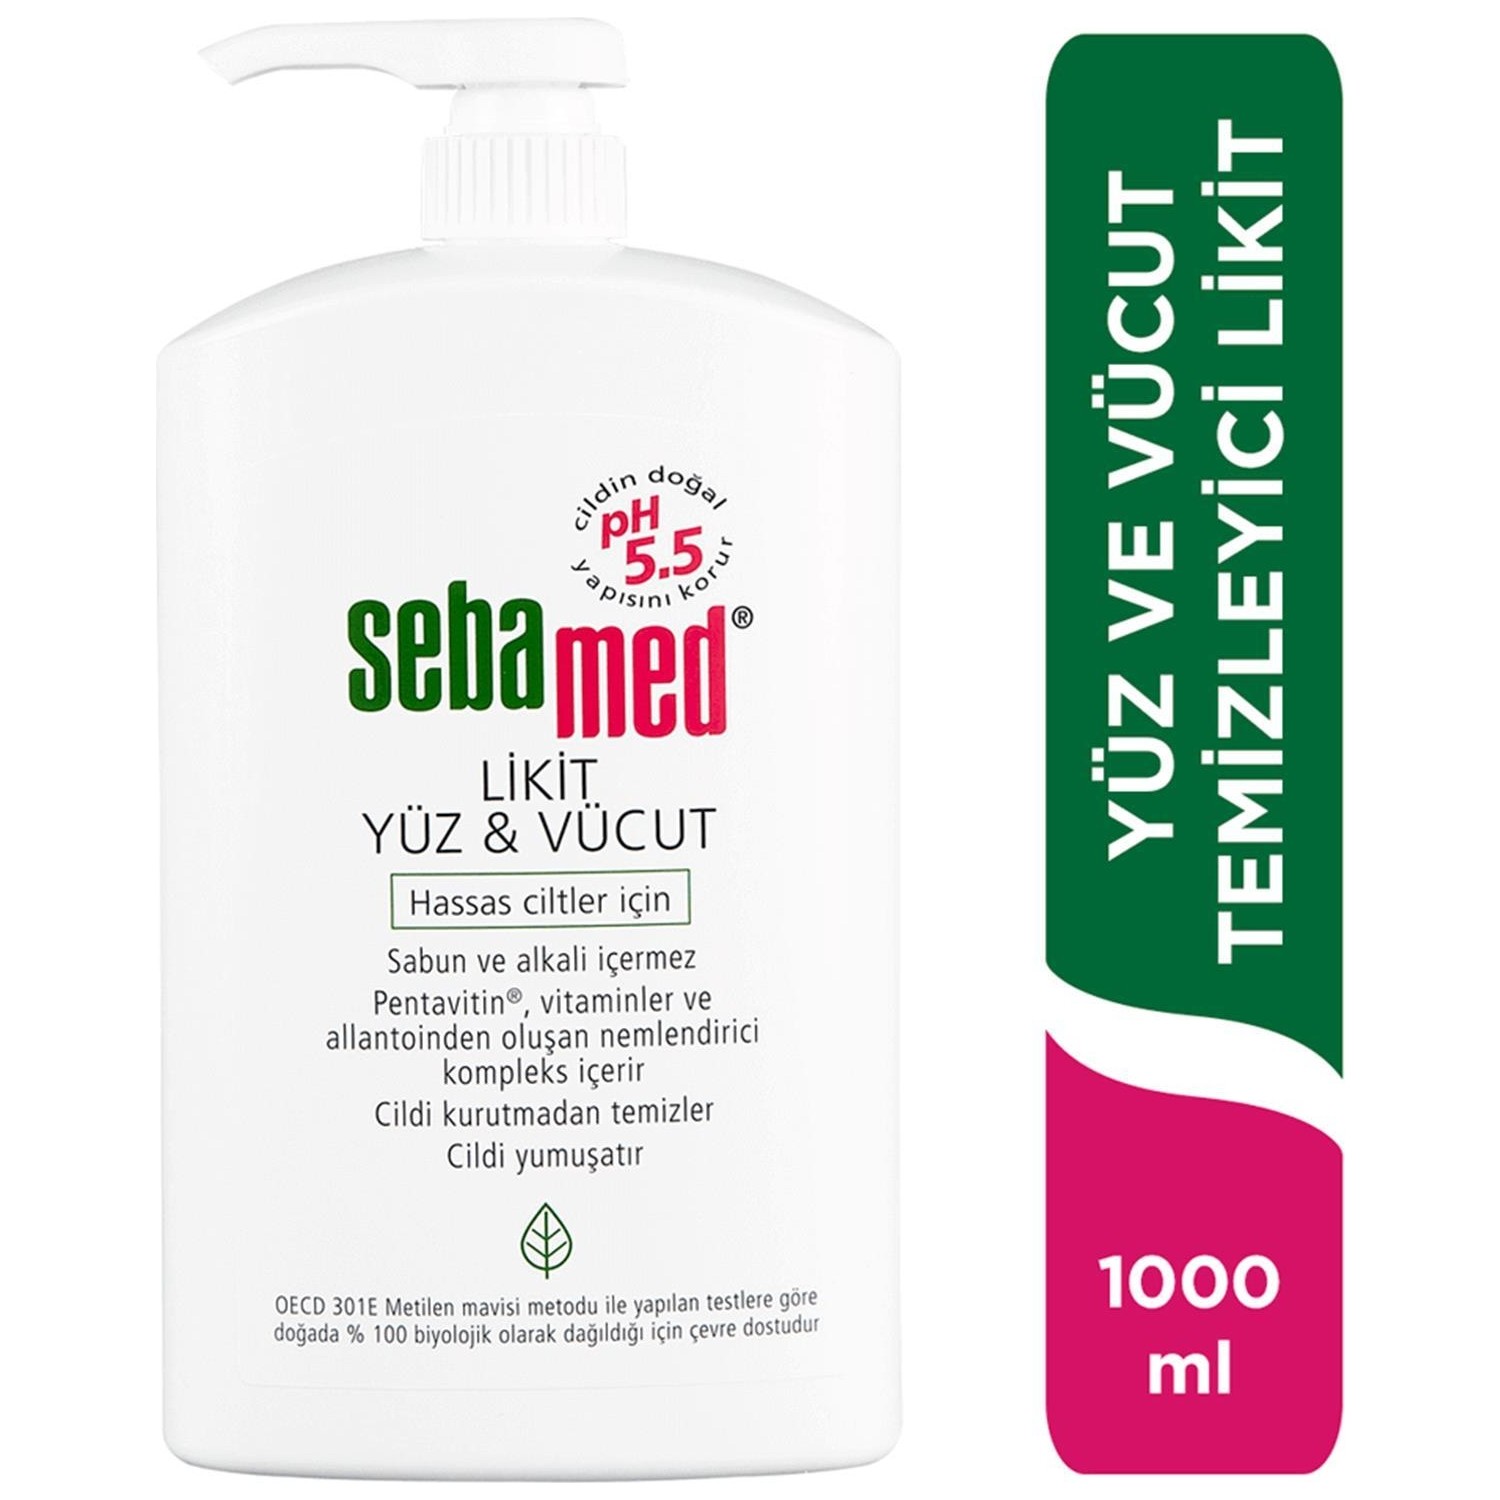 Очищающее средство Sebamed для лица и тела, 1000 мл очищающее средство для тела и лица eucerin advanced cleansing 500 мл